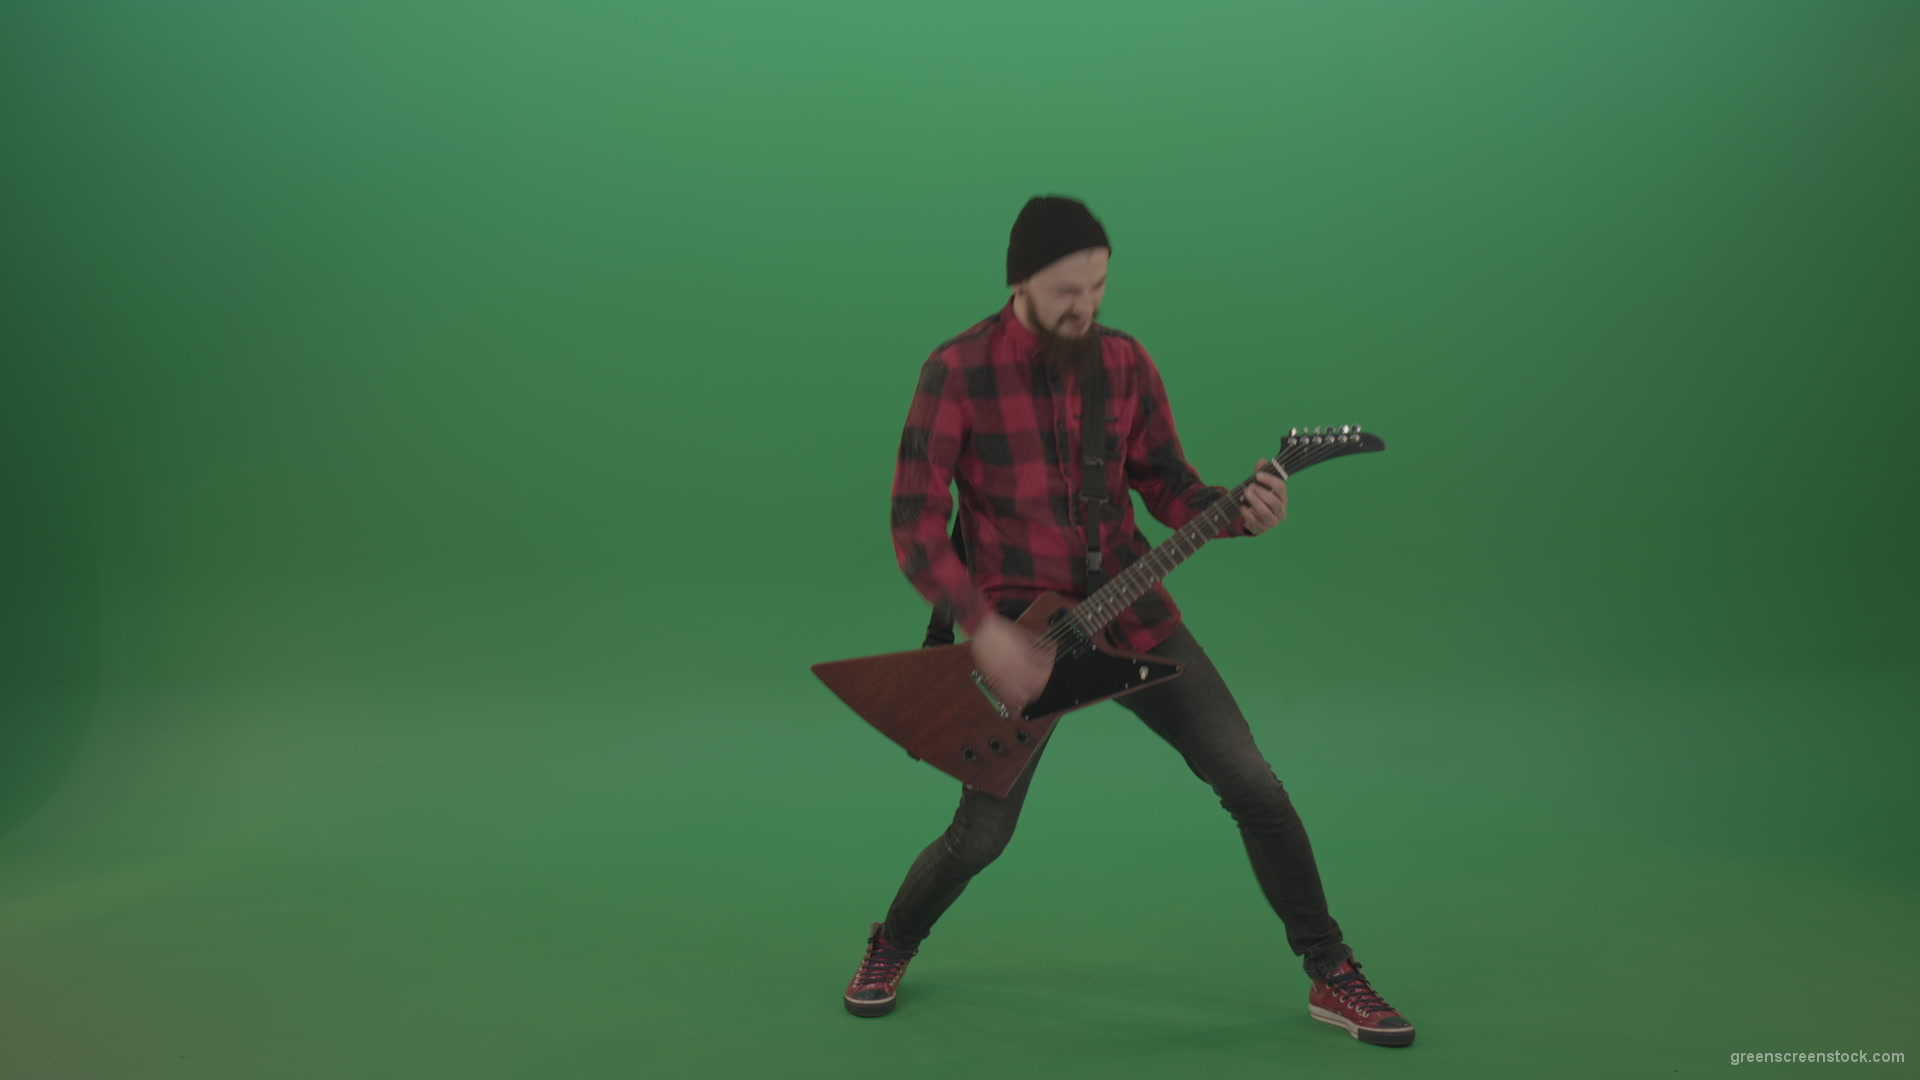 Full-size-Green-Screen-Musician-Rock-Guitarist-man-in-red-shirt-play-guitar-on-green-screen_005 Green Screen Stock